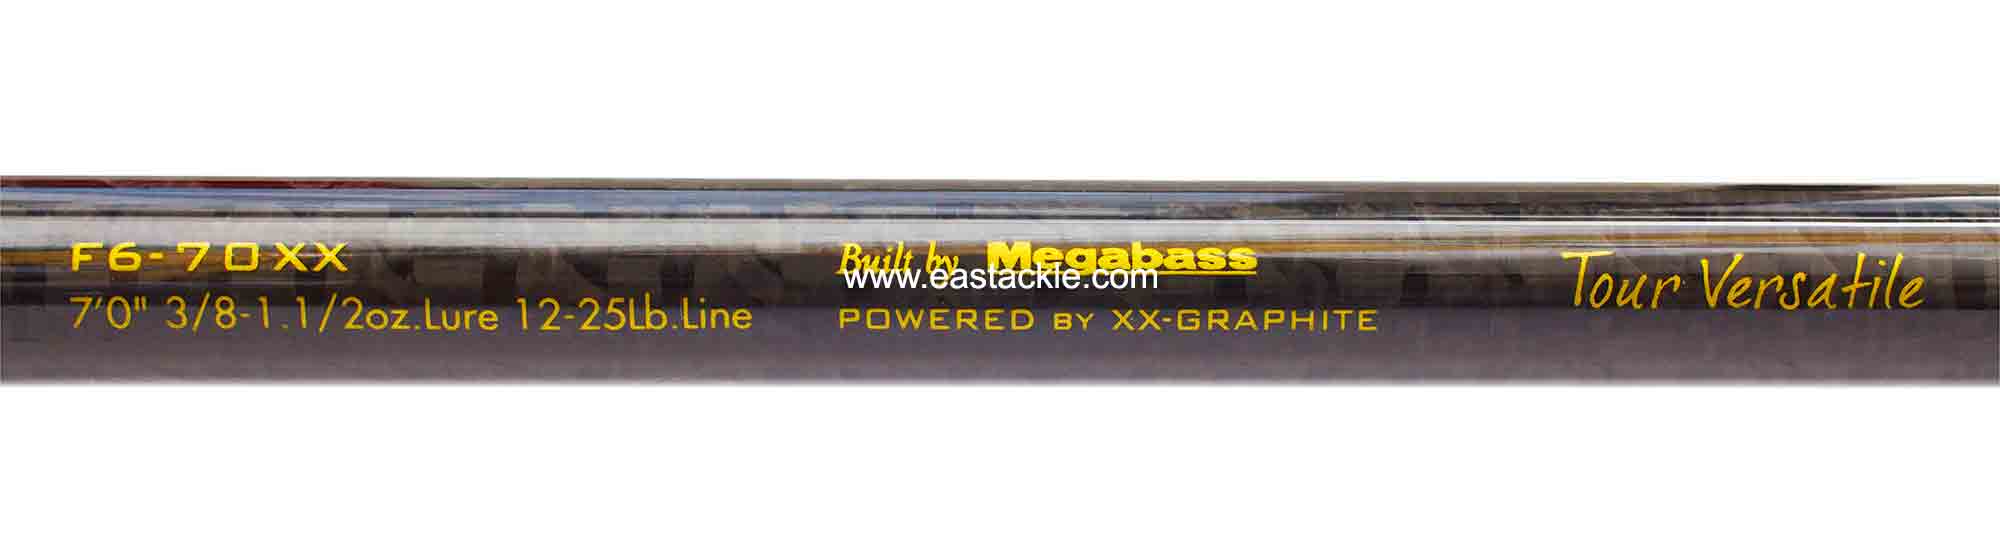 Megabass - Orochi XX - F6-70XX - TOUR VERSATILE - Bait Casting Rod - Blank Specifications